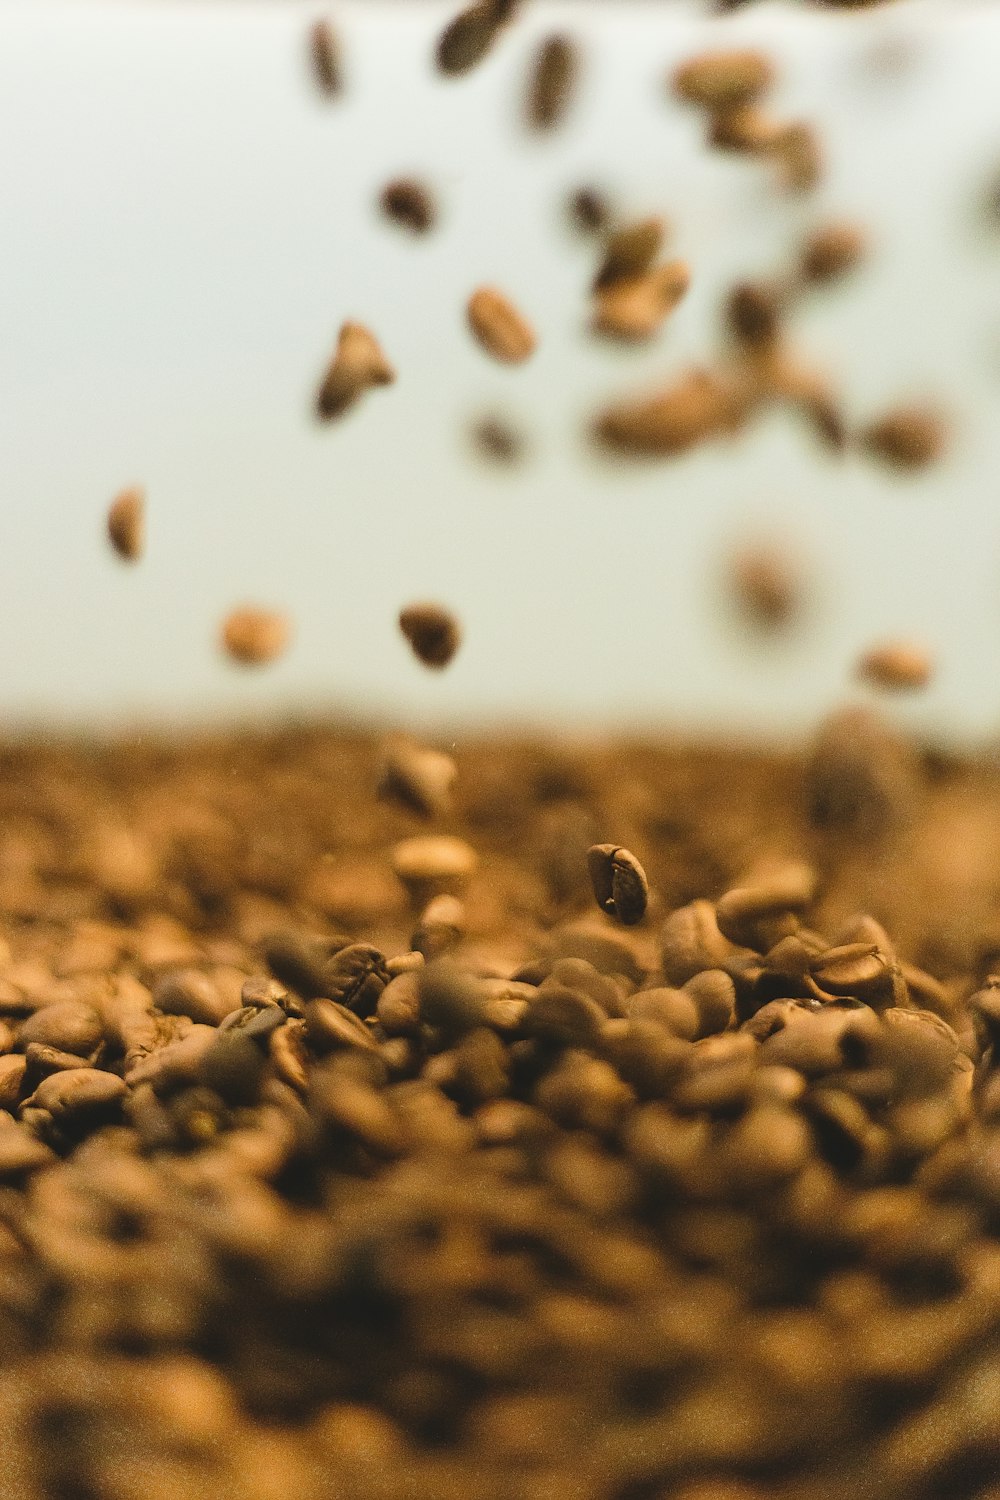 lote de granos de café